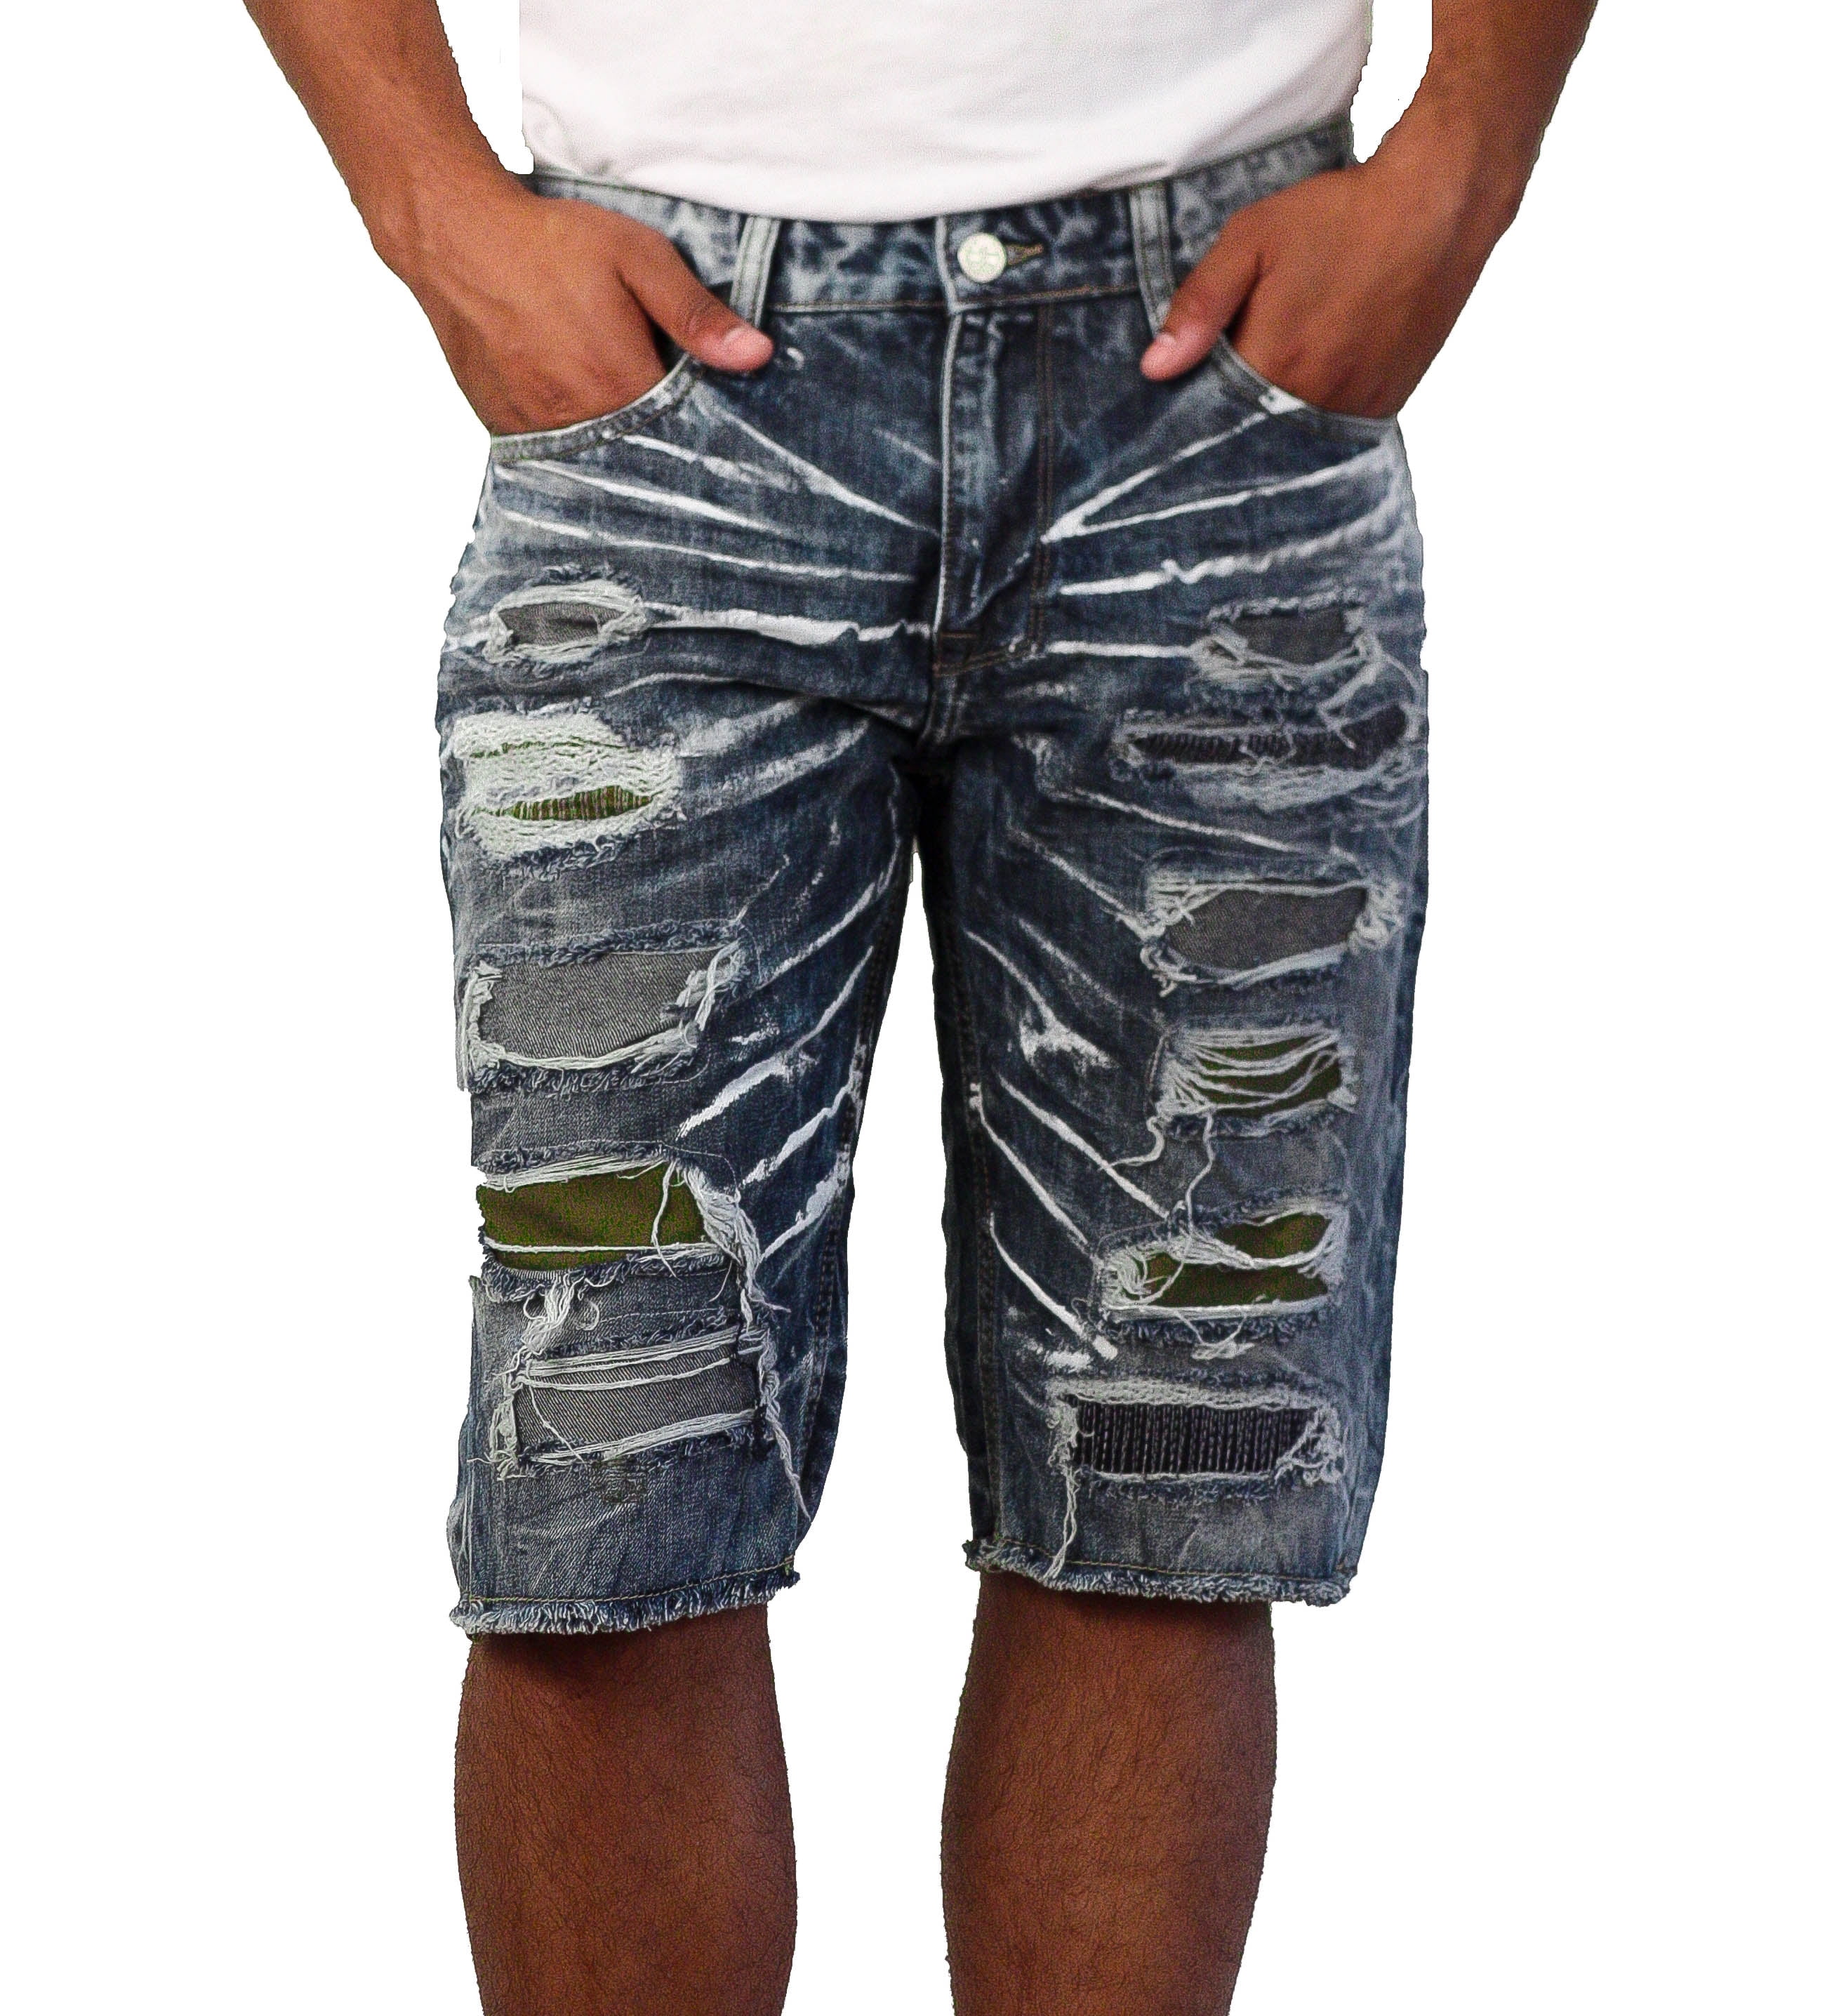 jordan craig jean shorts